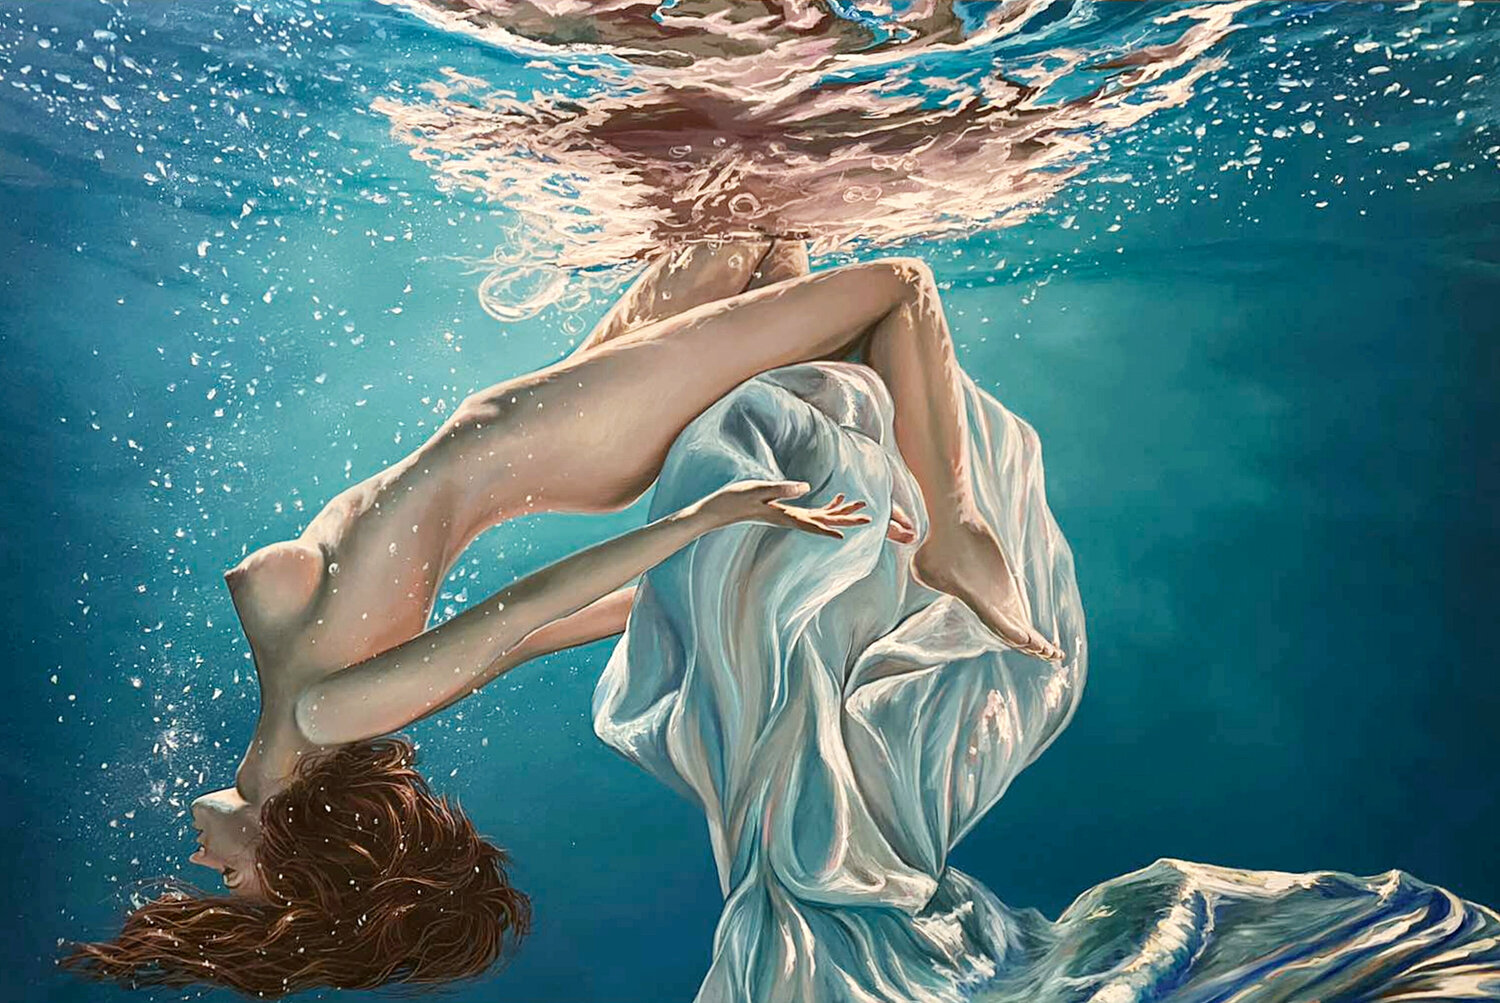 alvin soriano share nude women swimming underwater photos